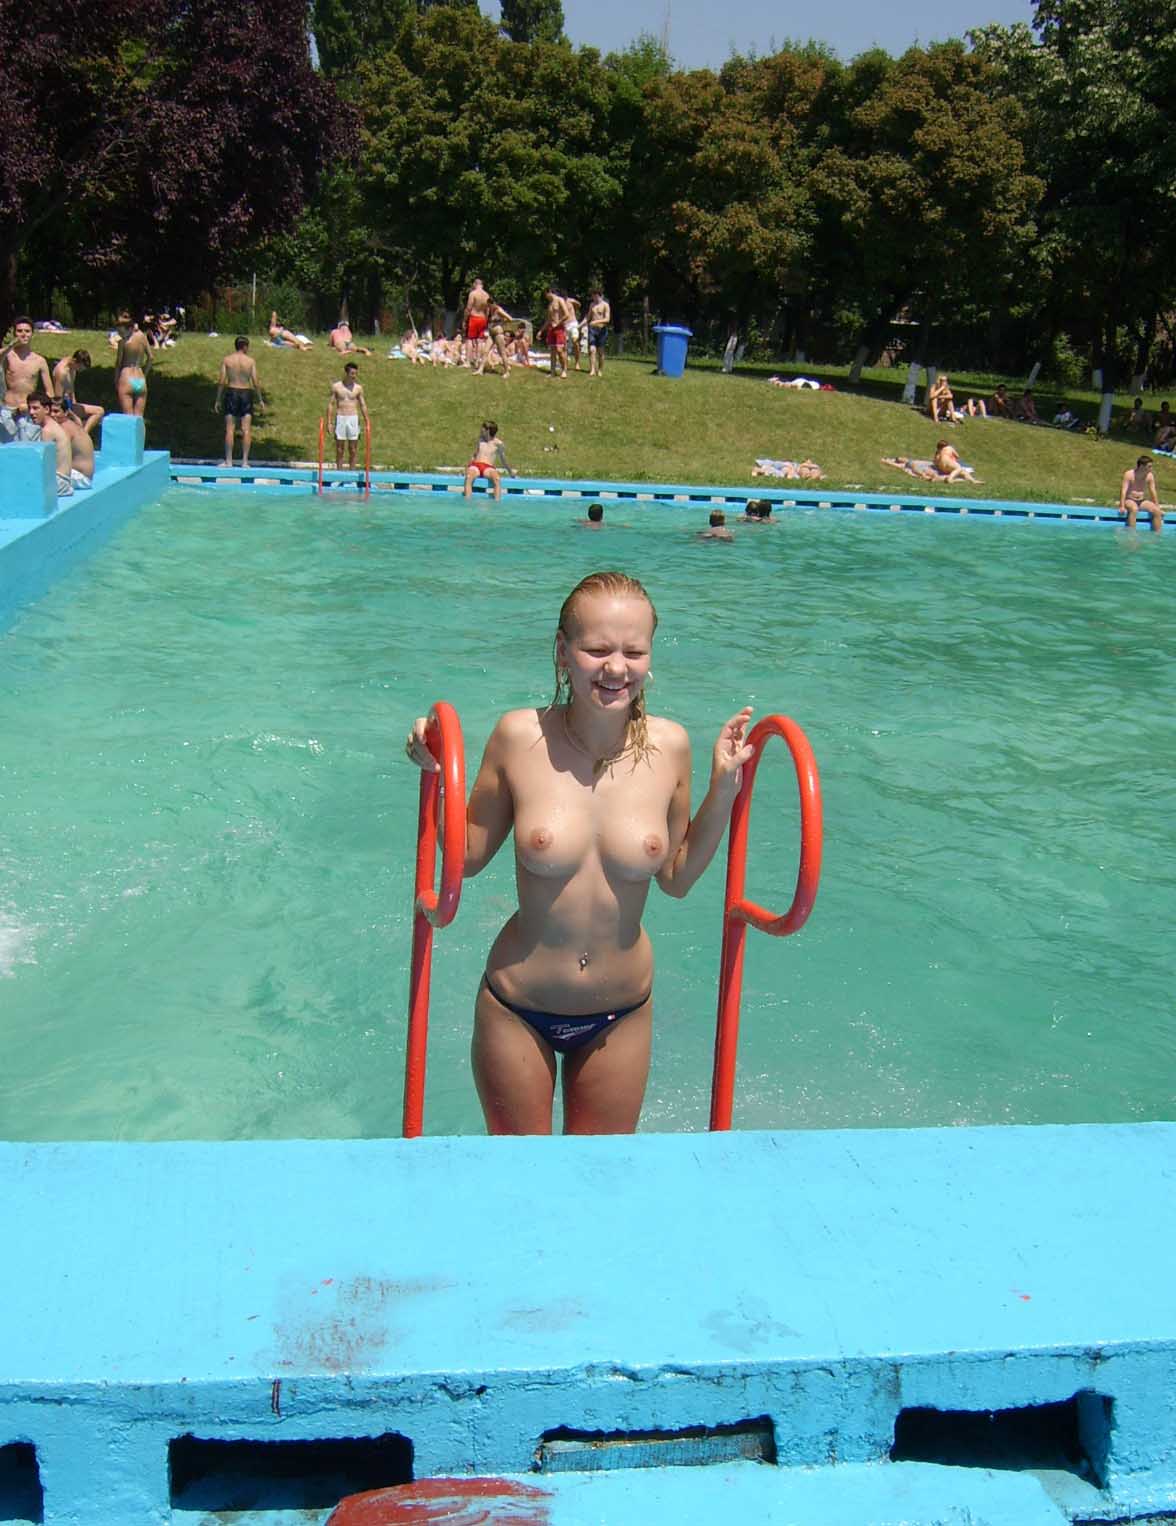 Public pool topless